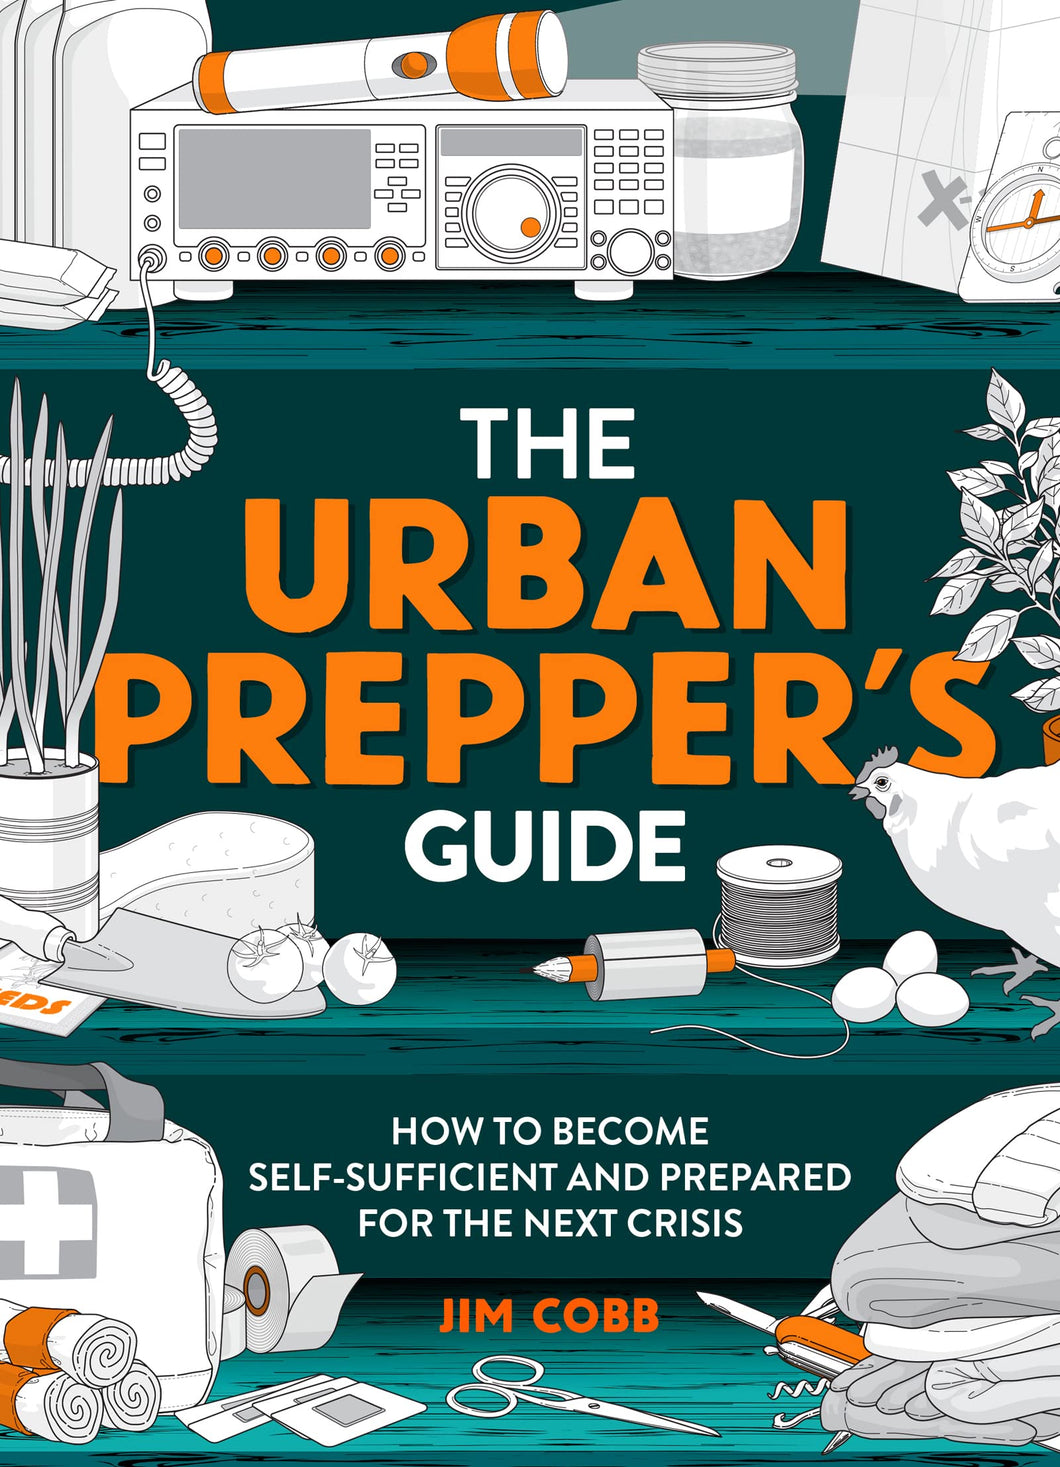 The Urban Prepper's Guide [Jim Cobb]